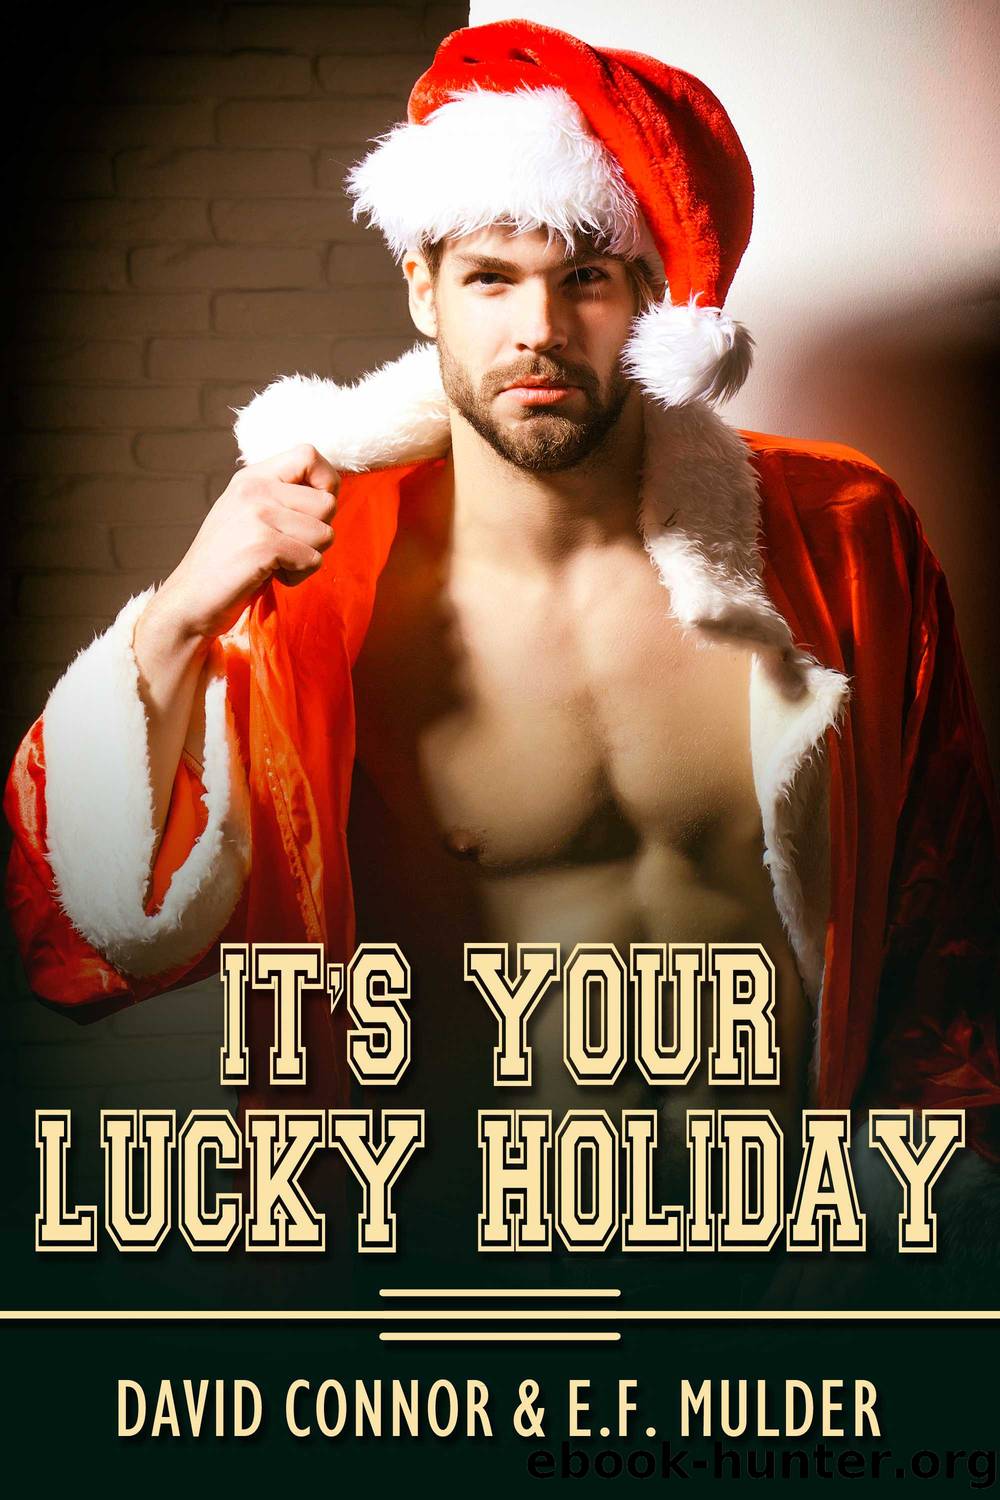 Itâs Your Lucky Holiday by David Connor & E.F. Mulder